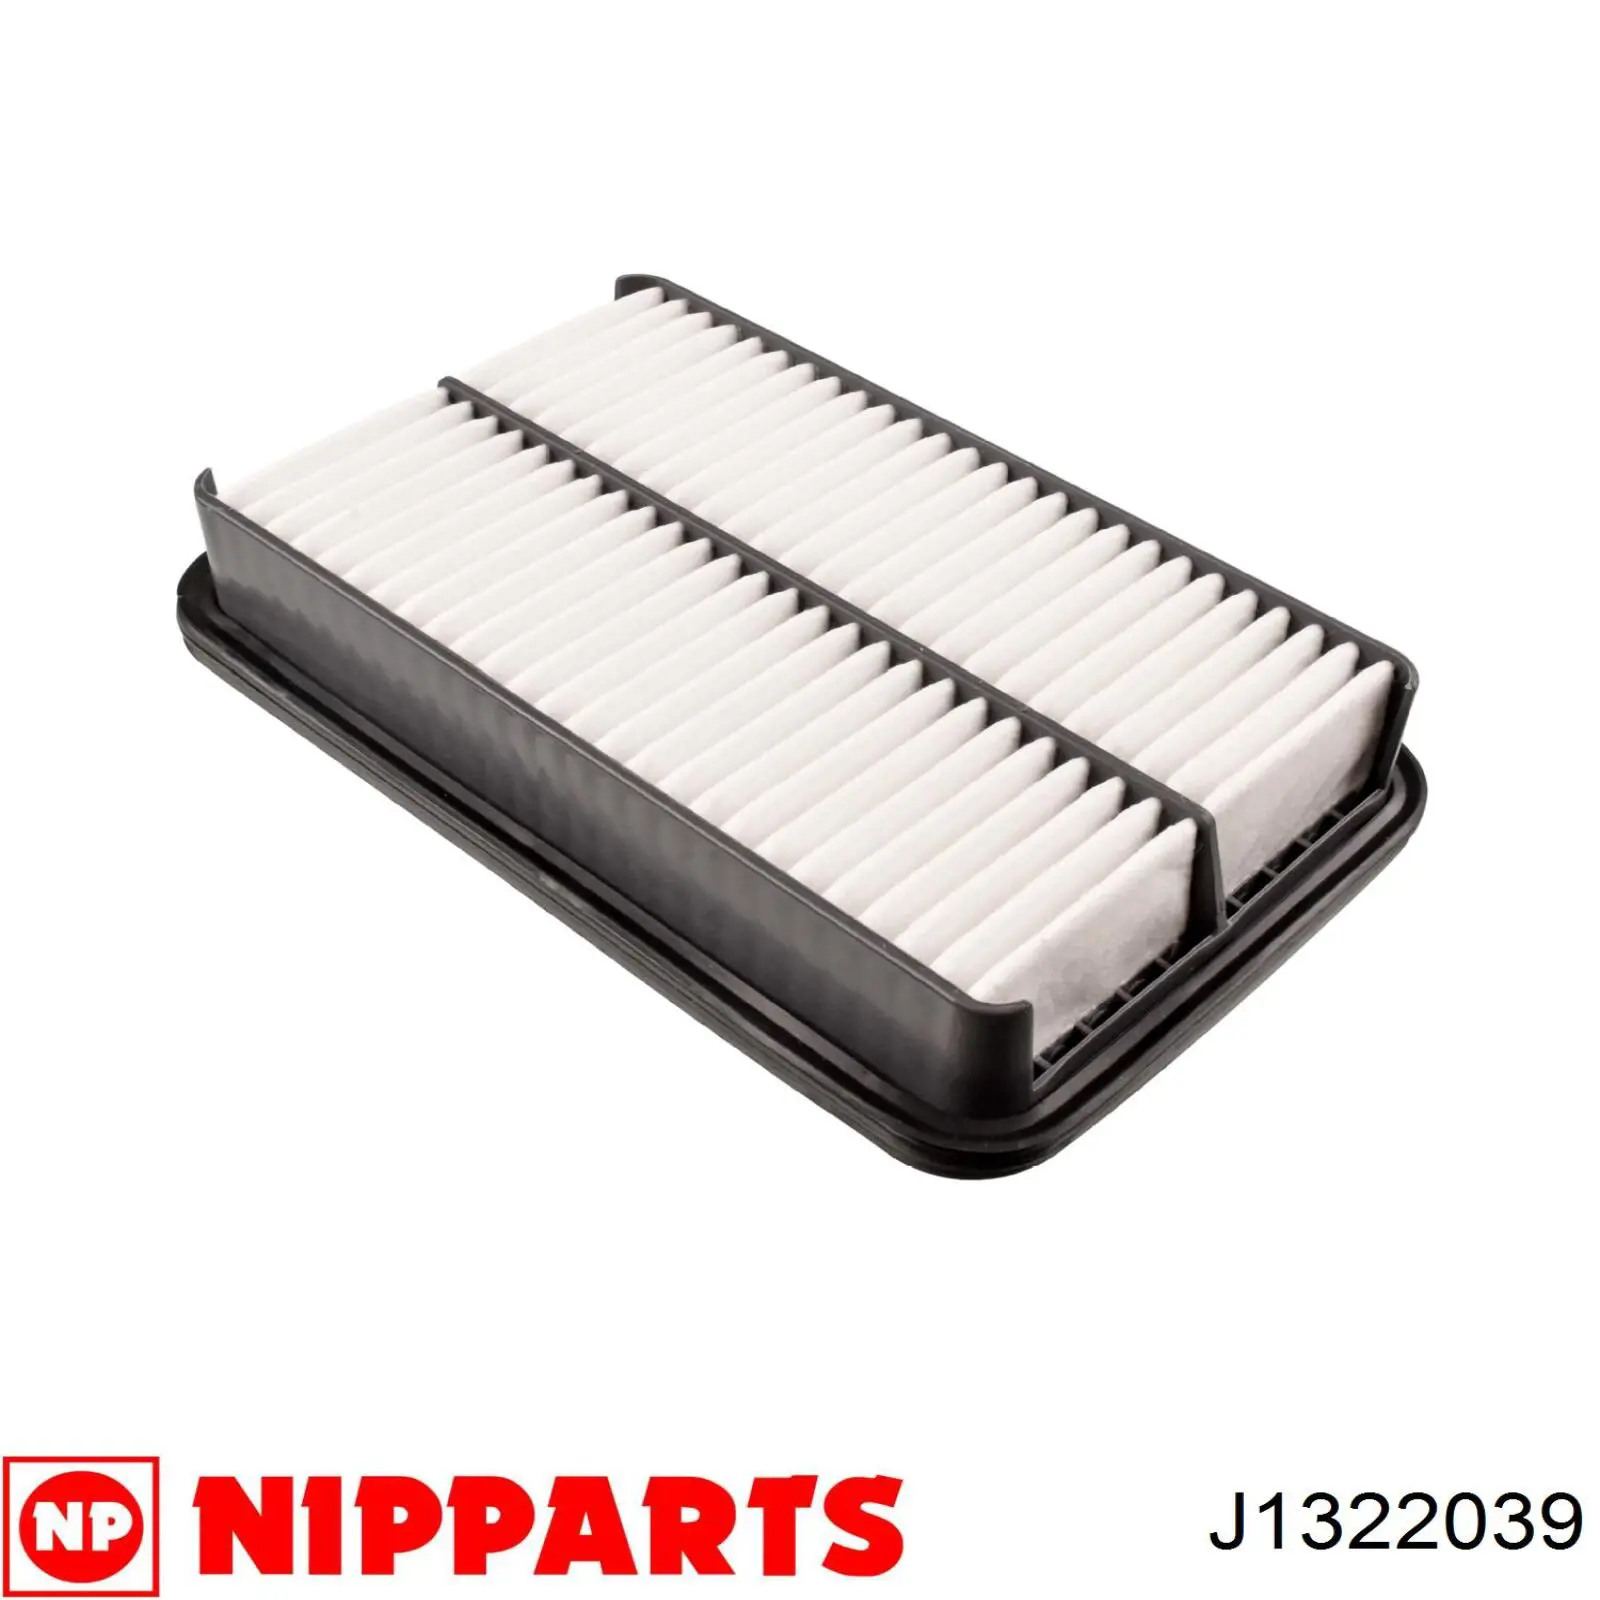 J1322039 Nipparts filtro de aire